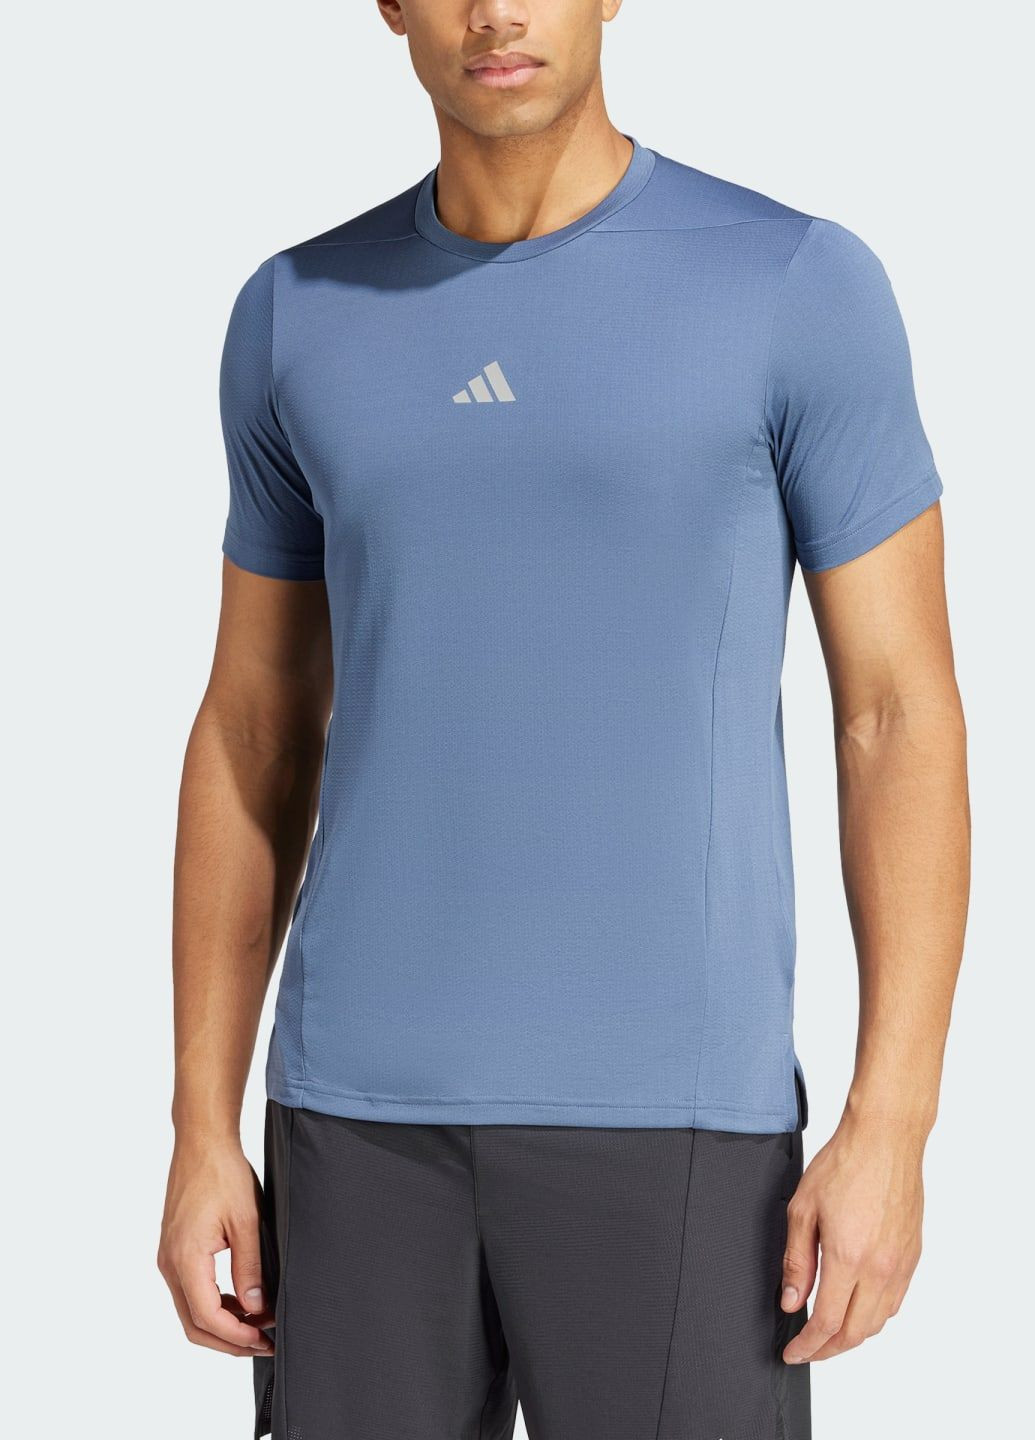 Синяя футболка designed for training hiit workout heat.rdy adidas